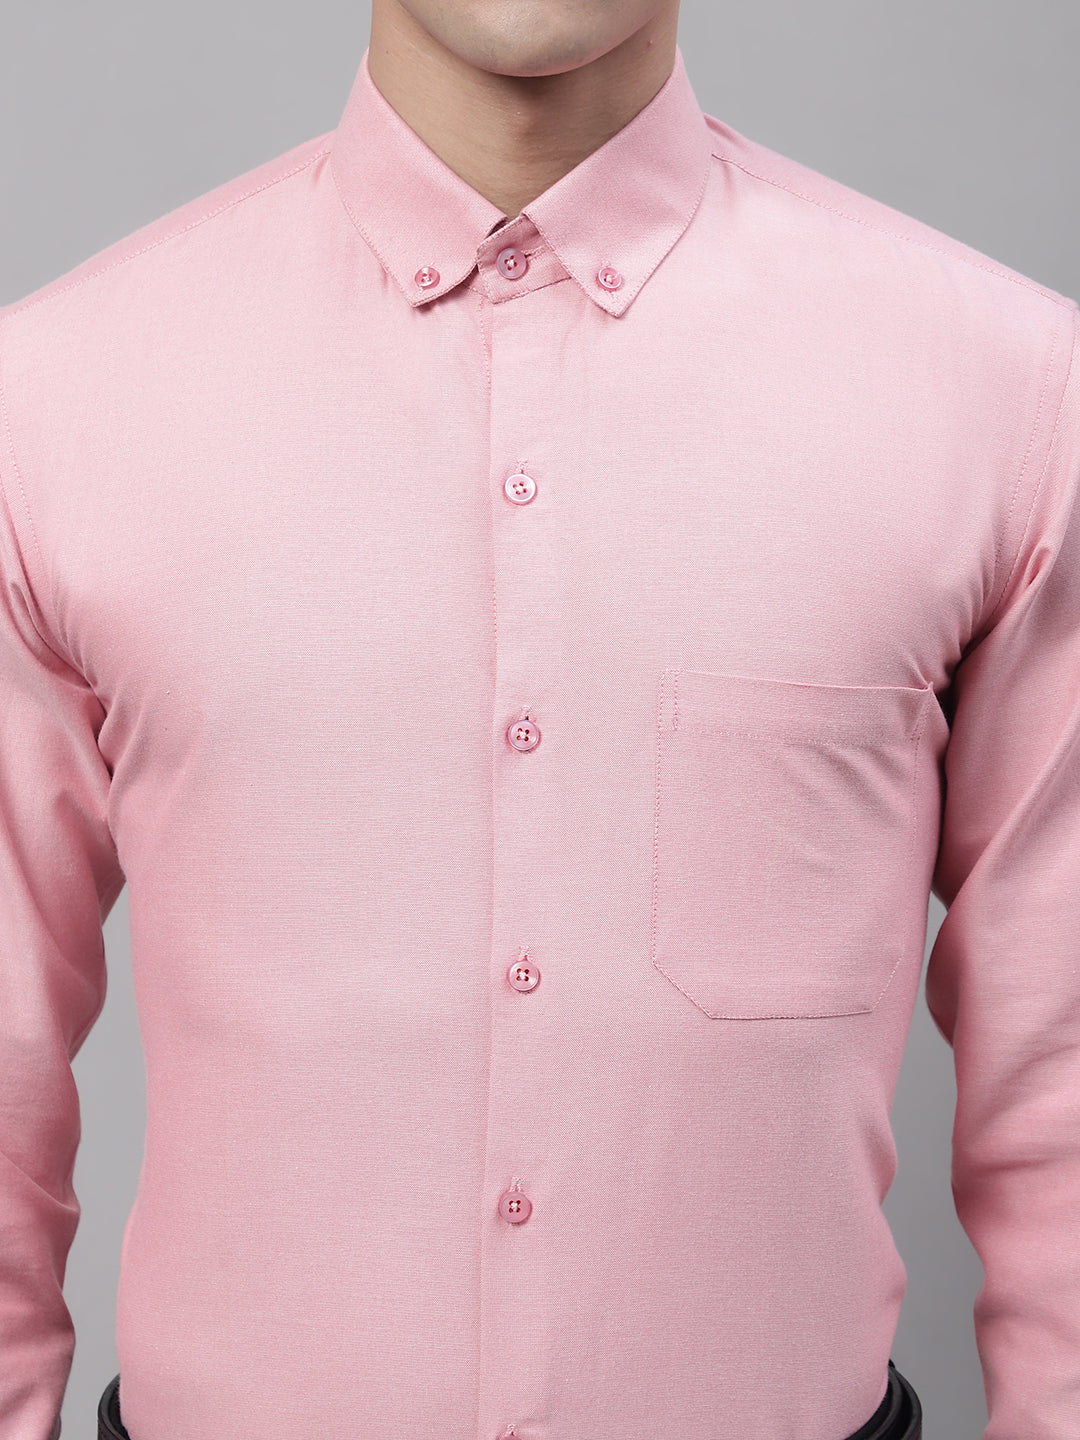 Men's Coral Cotton Solid Formal Shirt